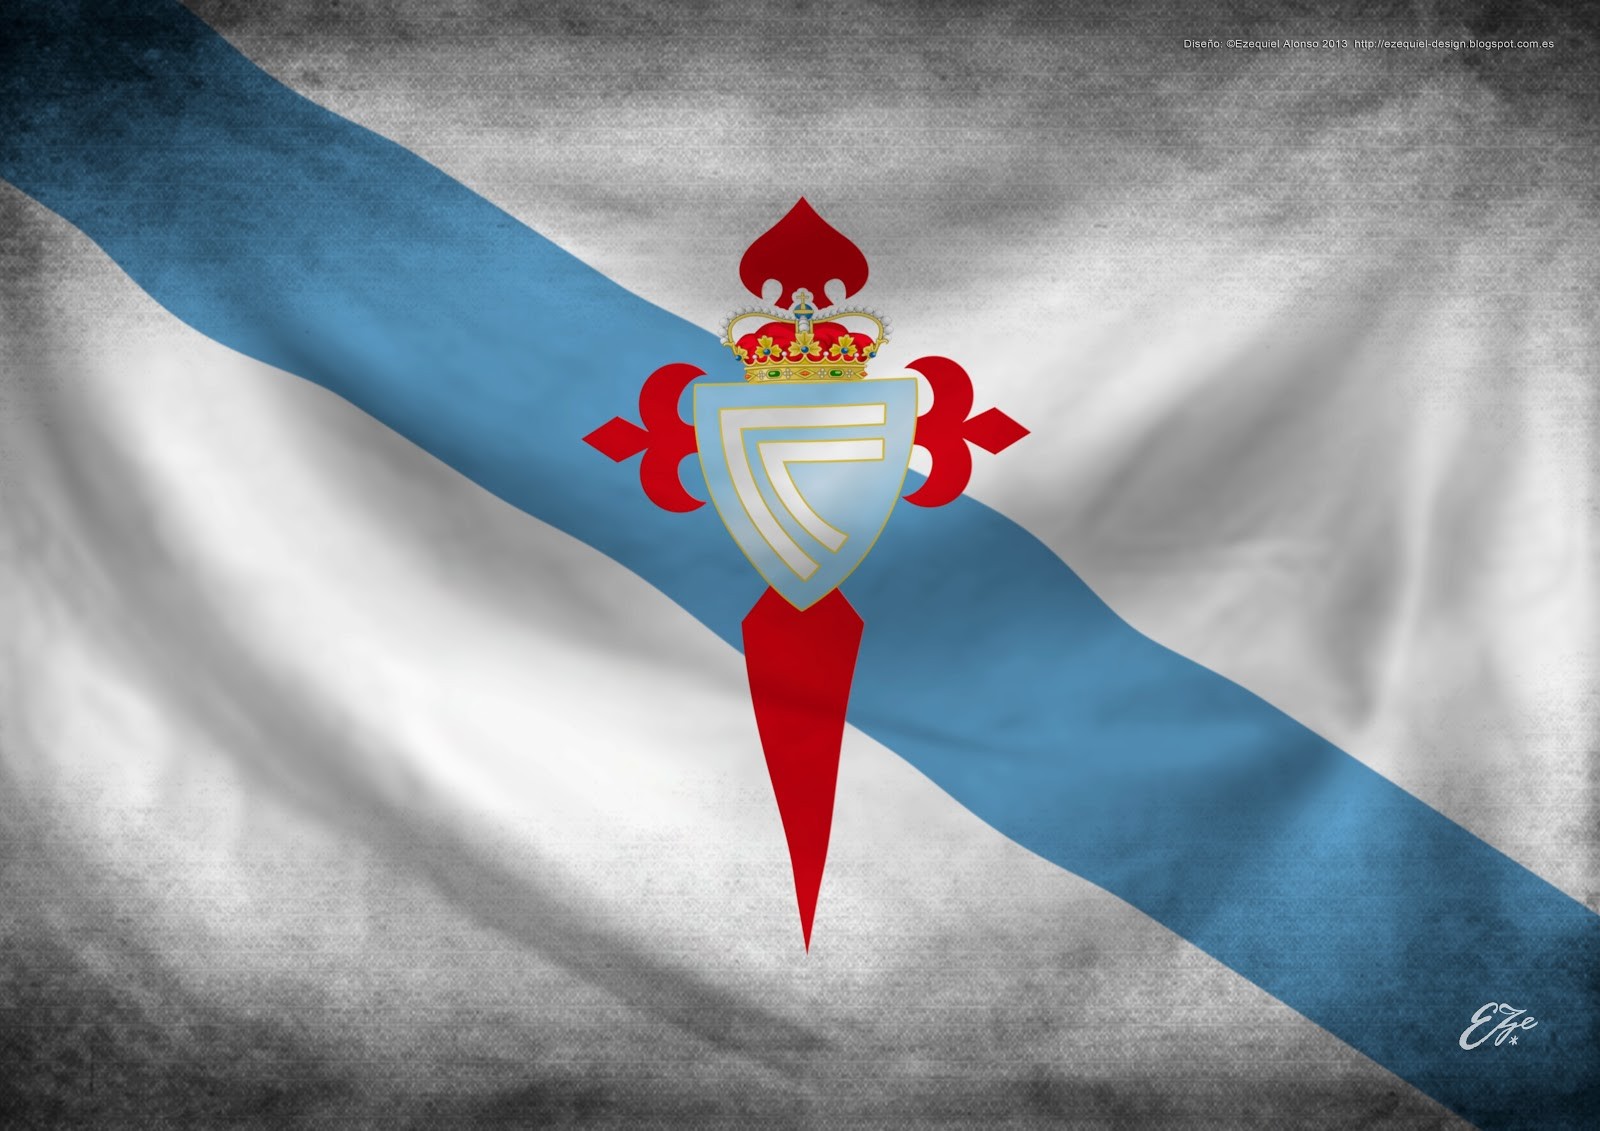 General 1600x1131 Galicia Celta de Vigo flag soccer